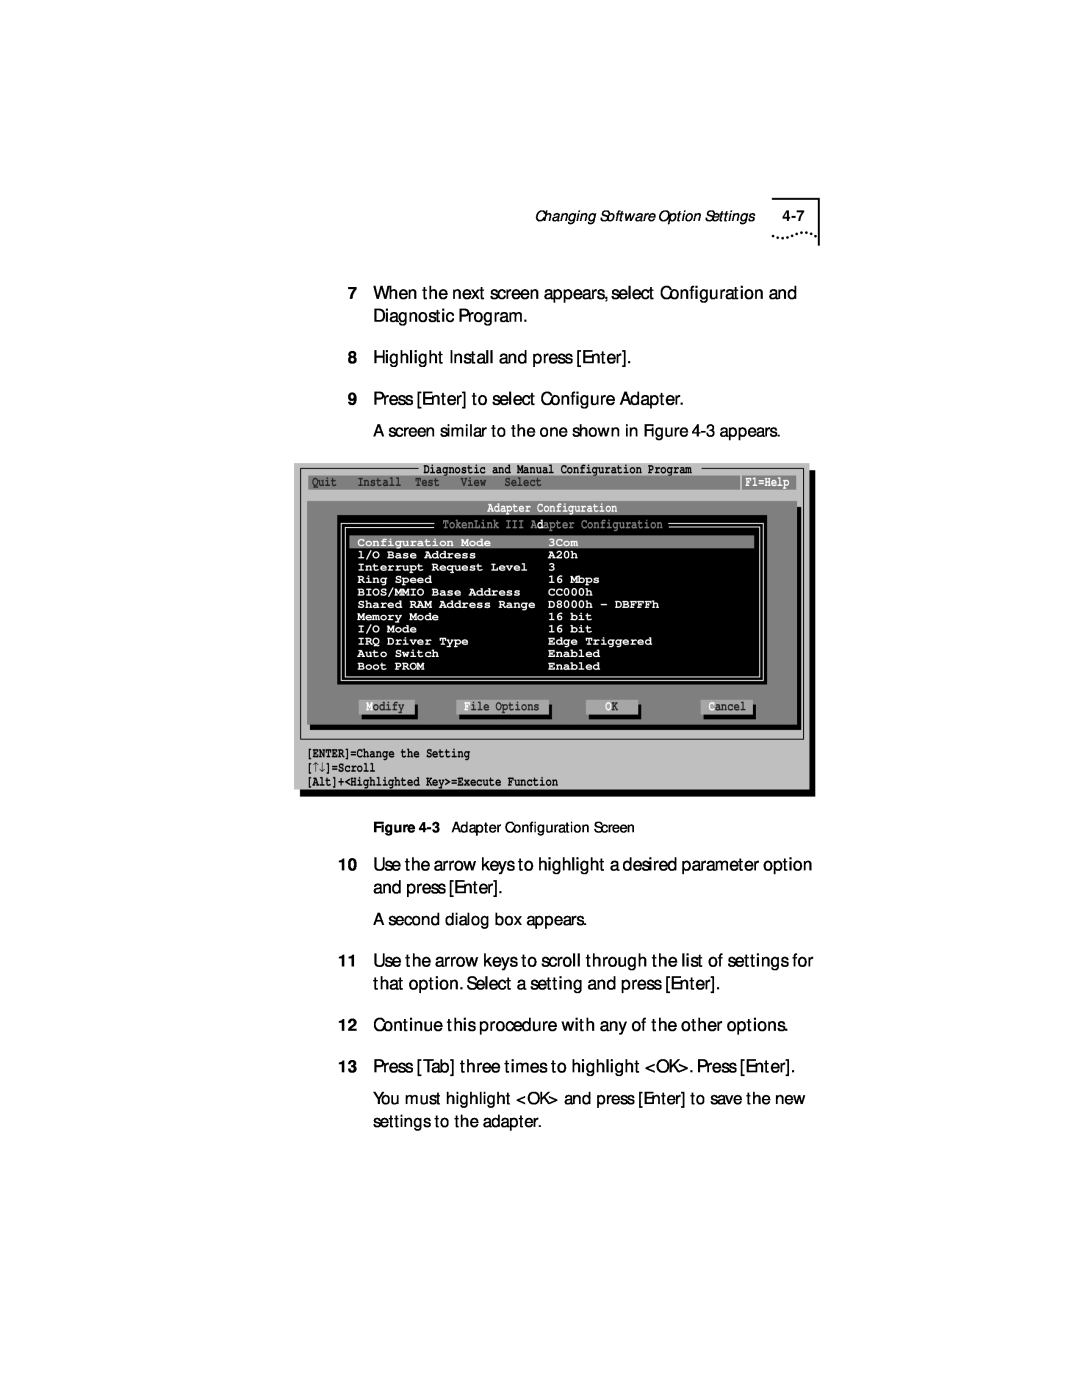 IBM 09-0572-000 manual Highlight Install and press Enter 